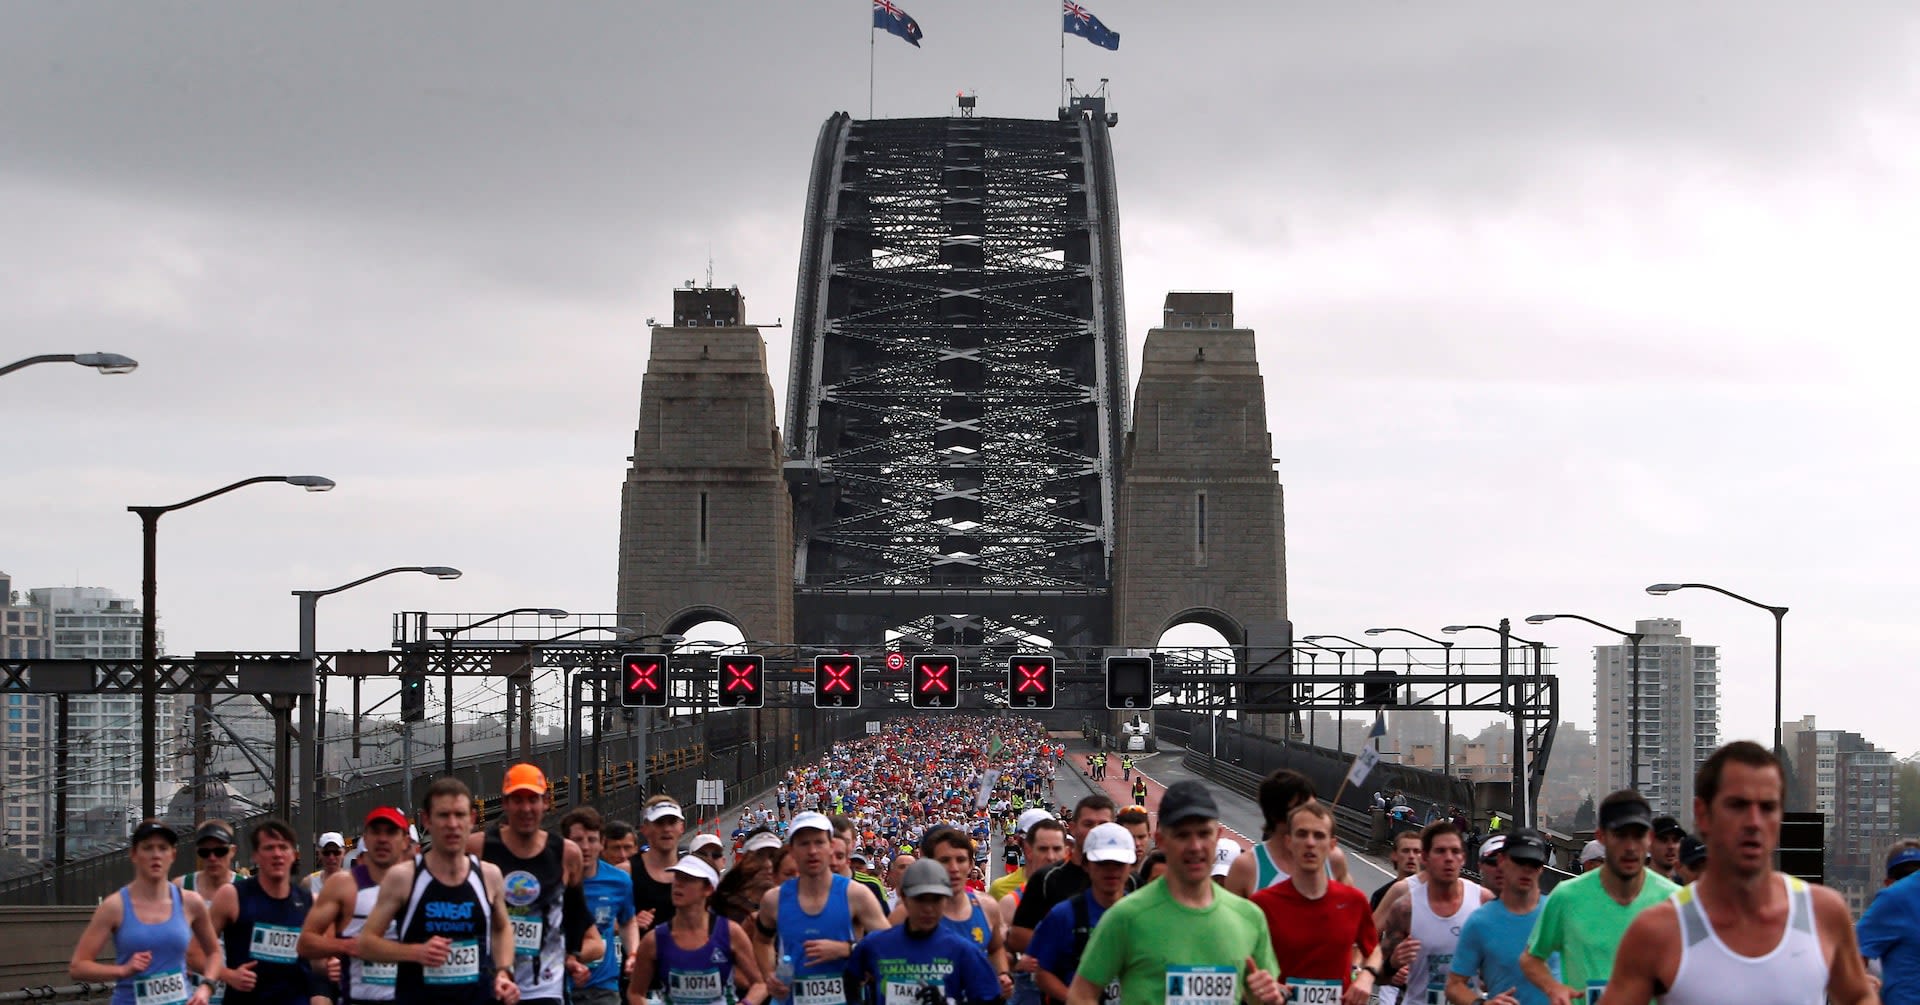 Sydney's World Marathon Majors bid boosted by record entry